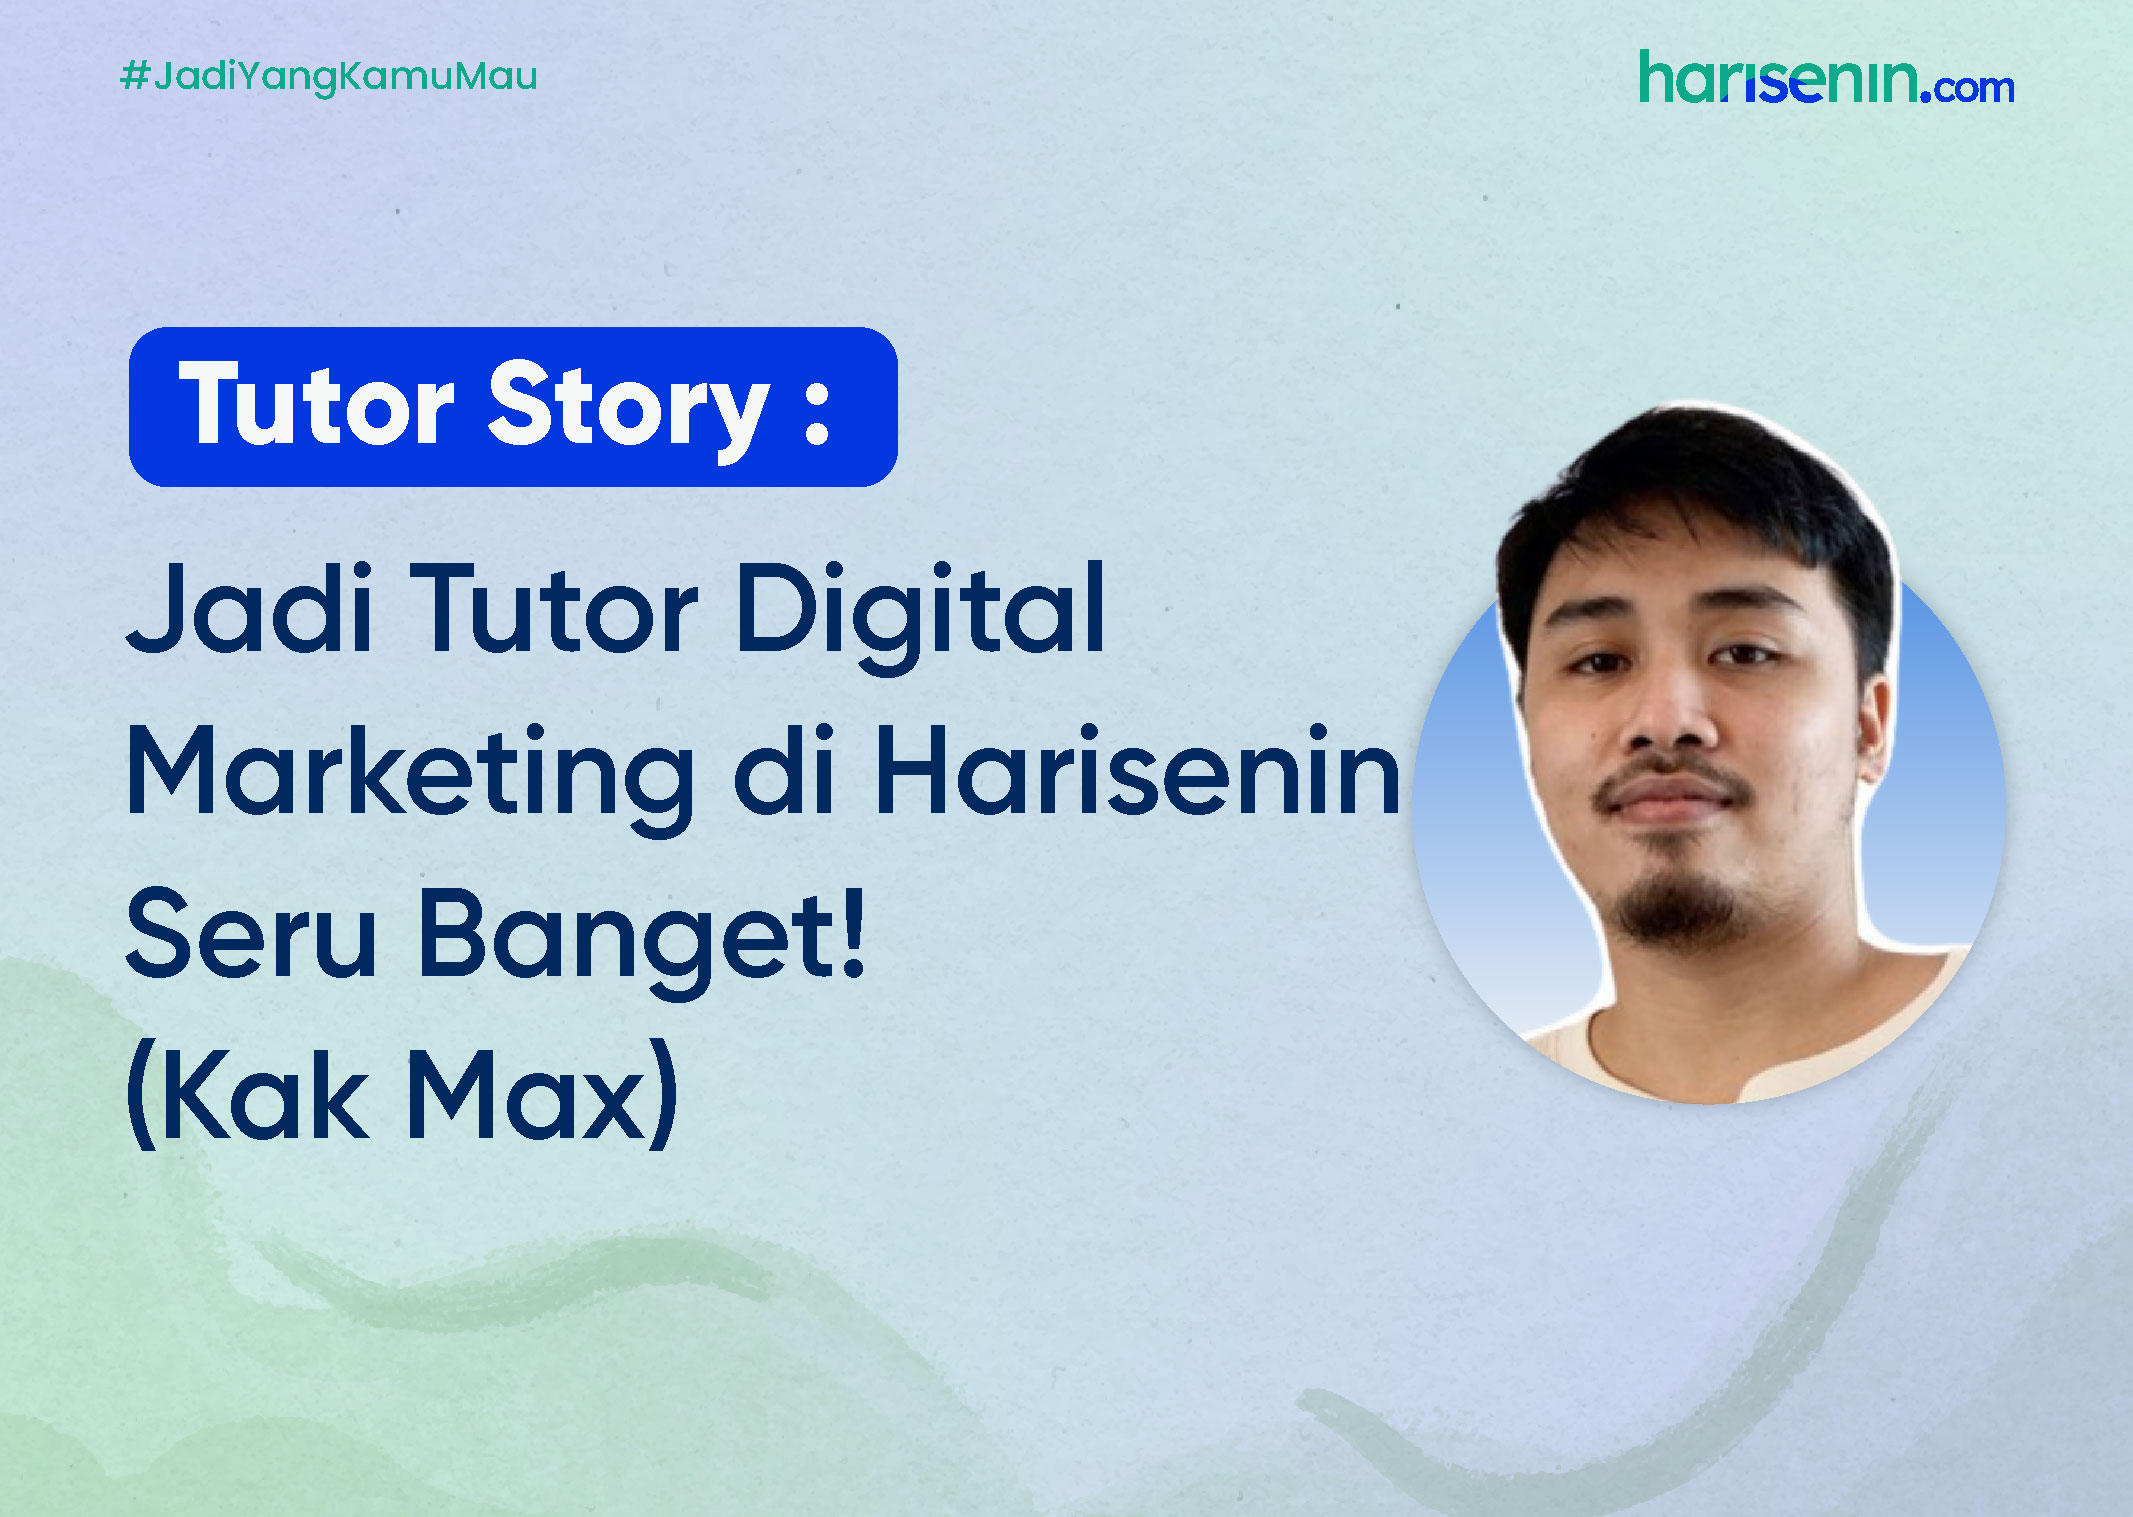 Tutor Story : Jadi Tutor Digital Marketing di Harisenin Seru Banget! (Kak Max)